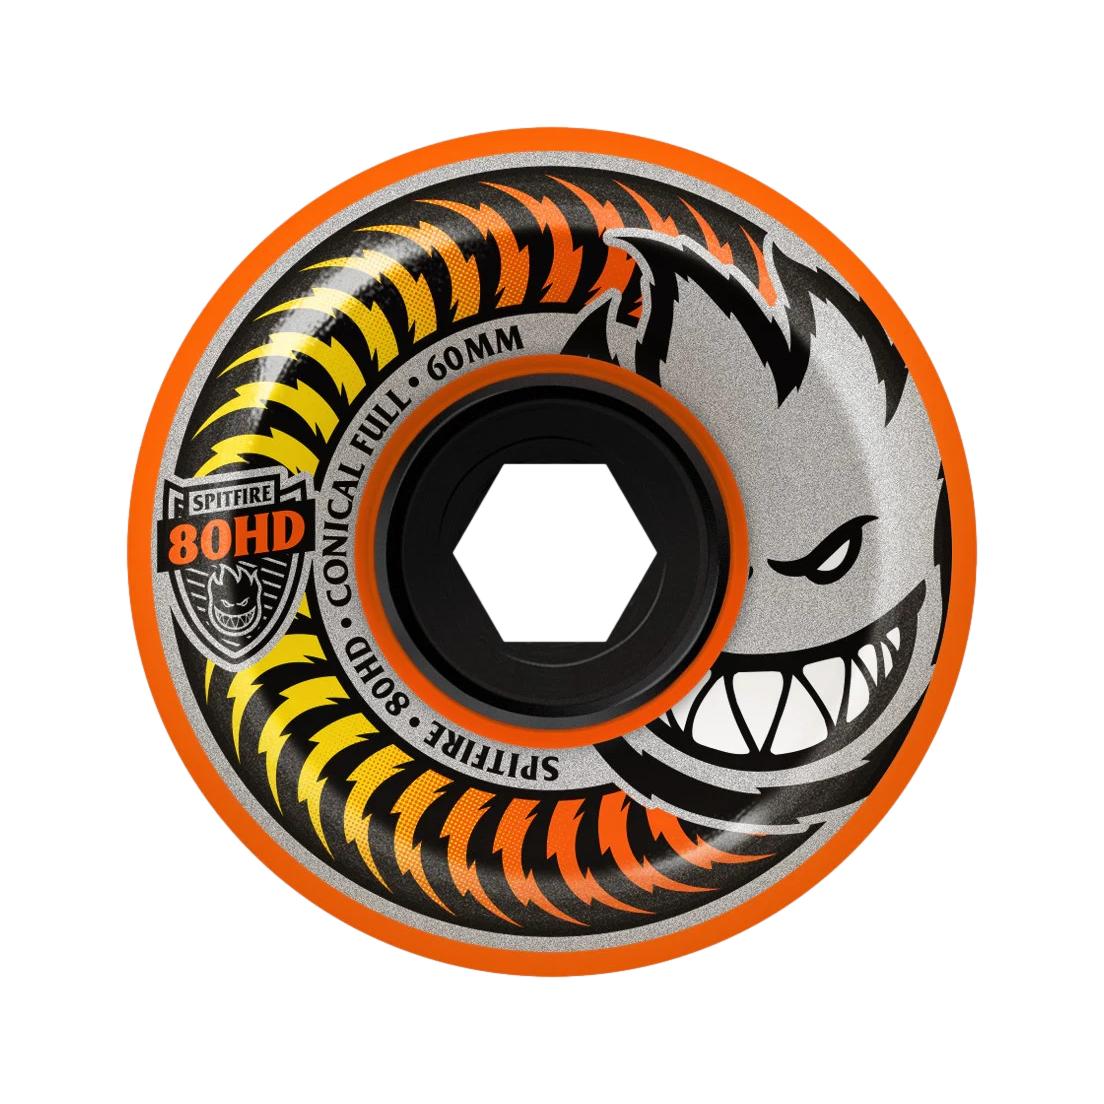 SF 80HD Conical Full Fade Orange 55mm Wheels - Venue Skateboards